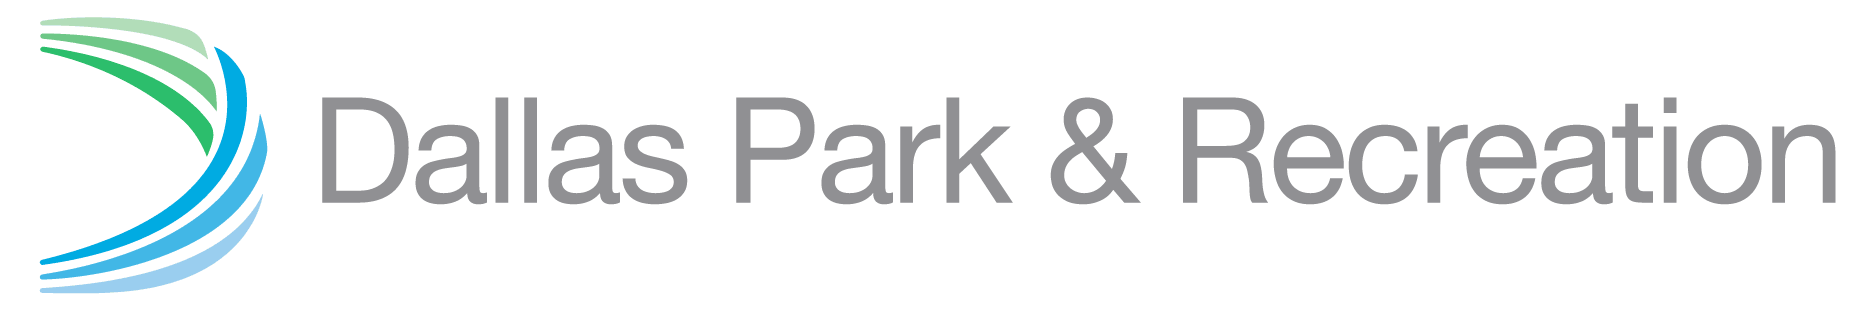 Dallas park and recreation logo.